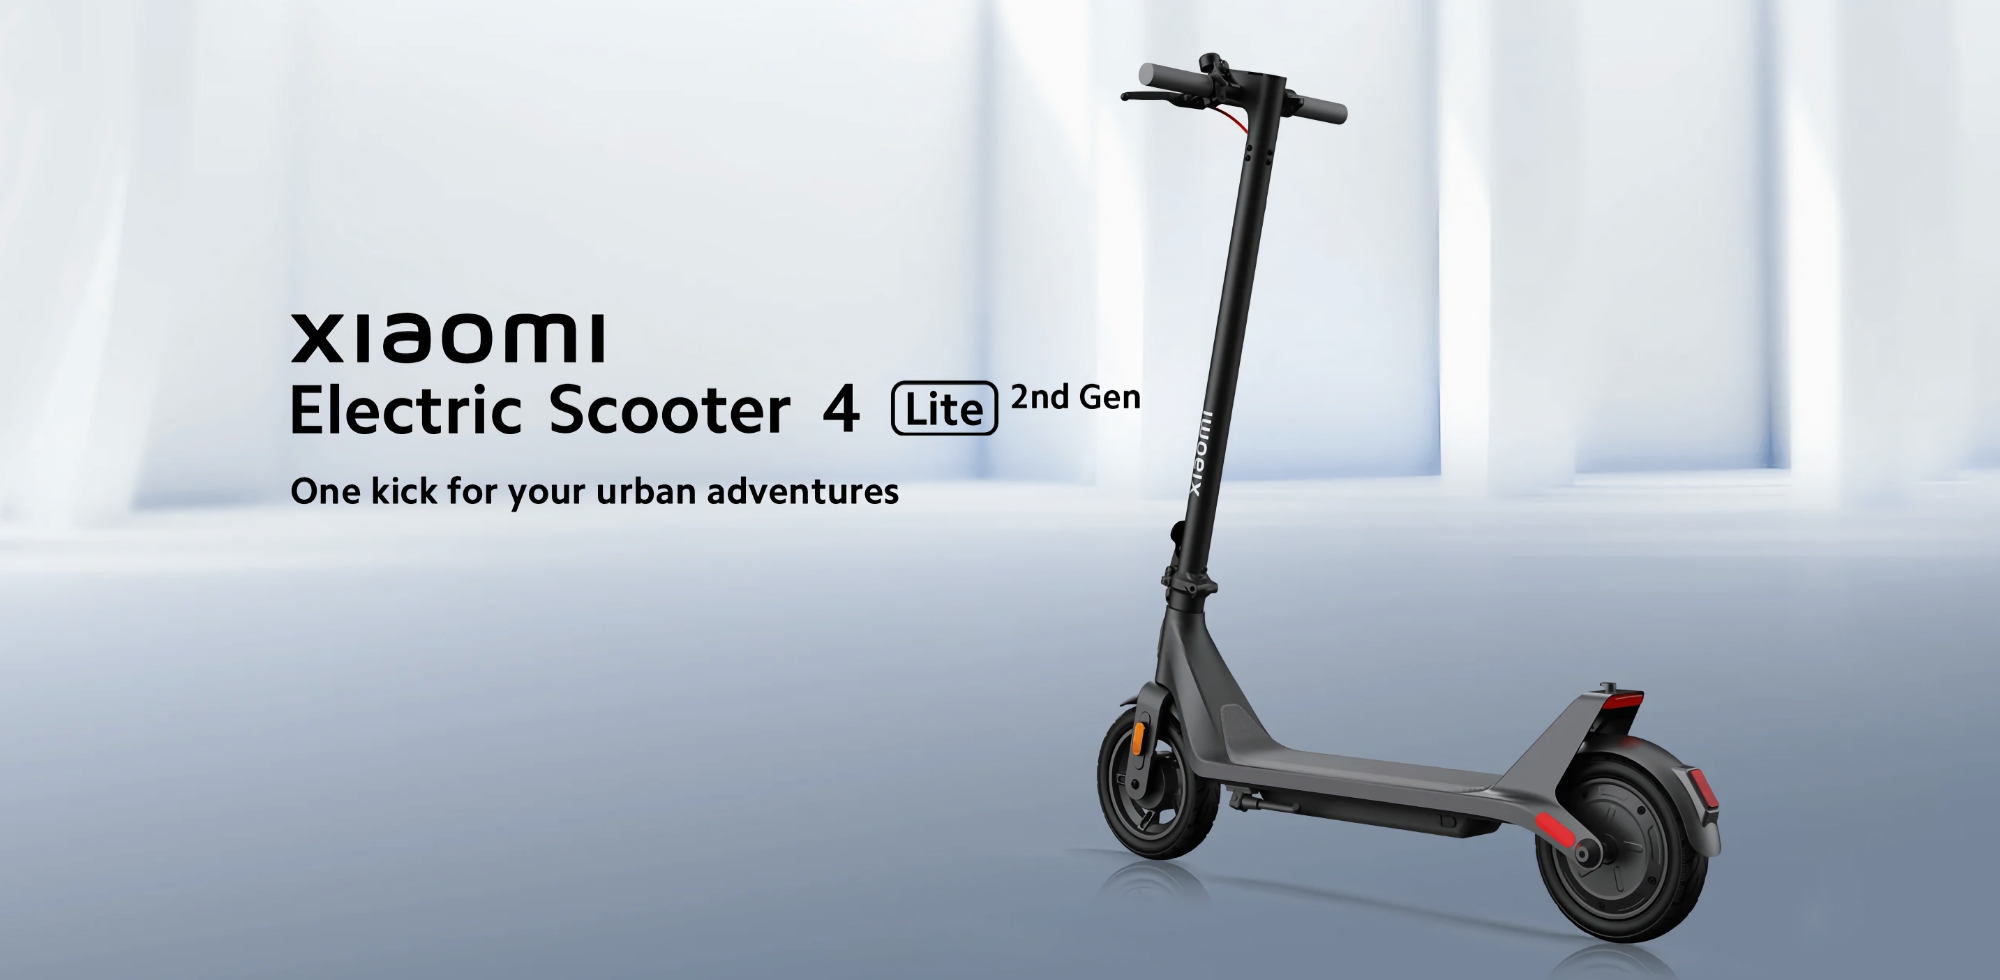 Xiaomi Electric Scooter 4 Lite (2nd Gen) с запасом хода до 25 км дебютировал в Европе